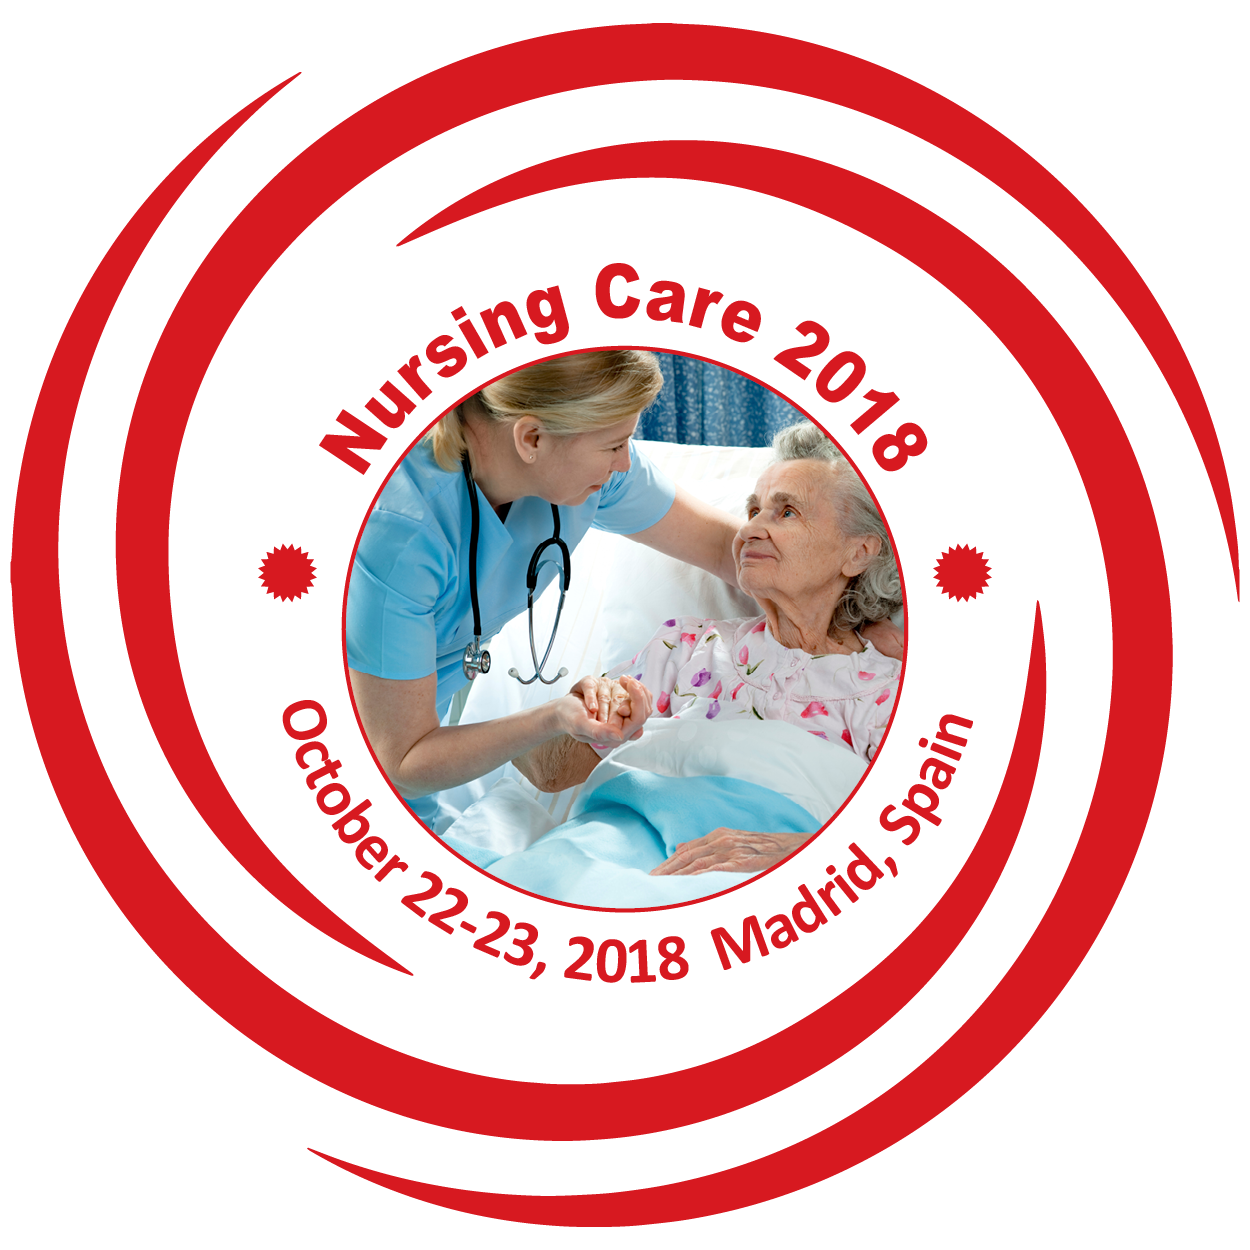 46th World Congress on Nursing Care & Evidence Based Practice